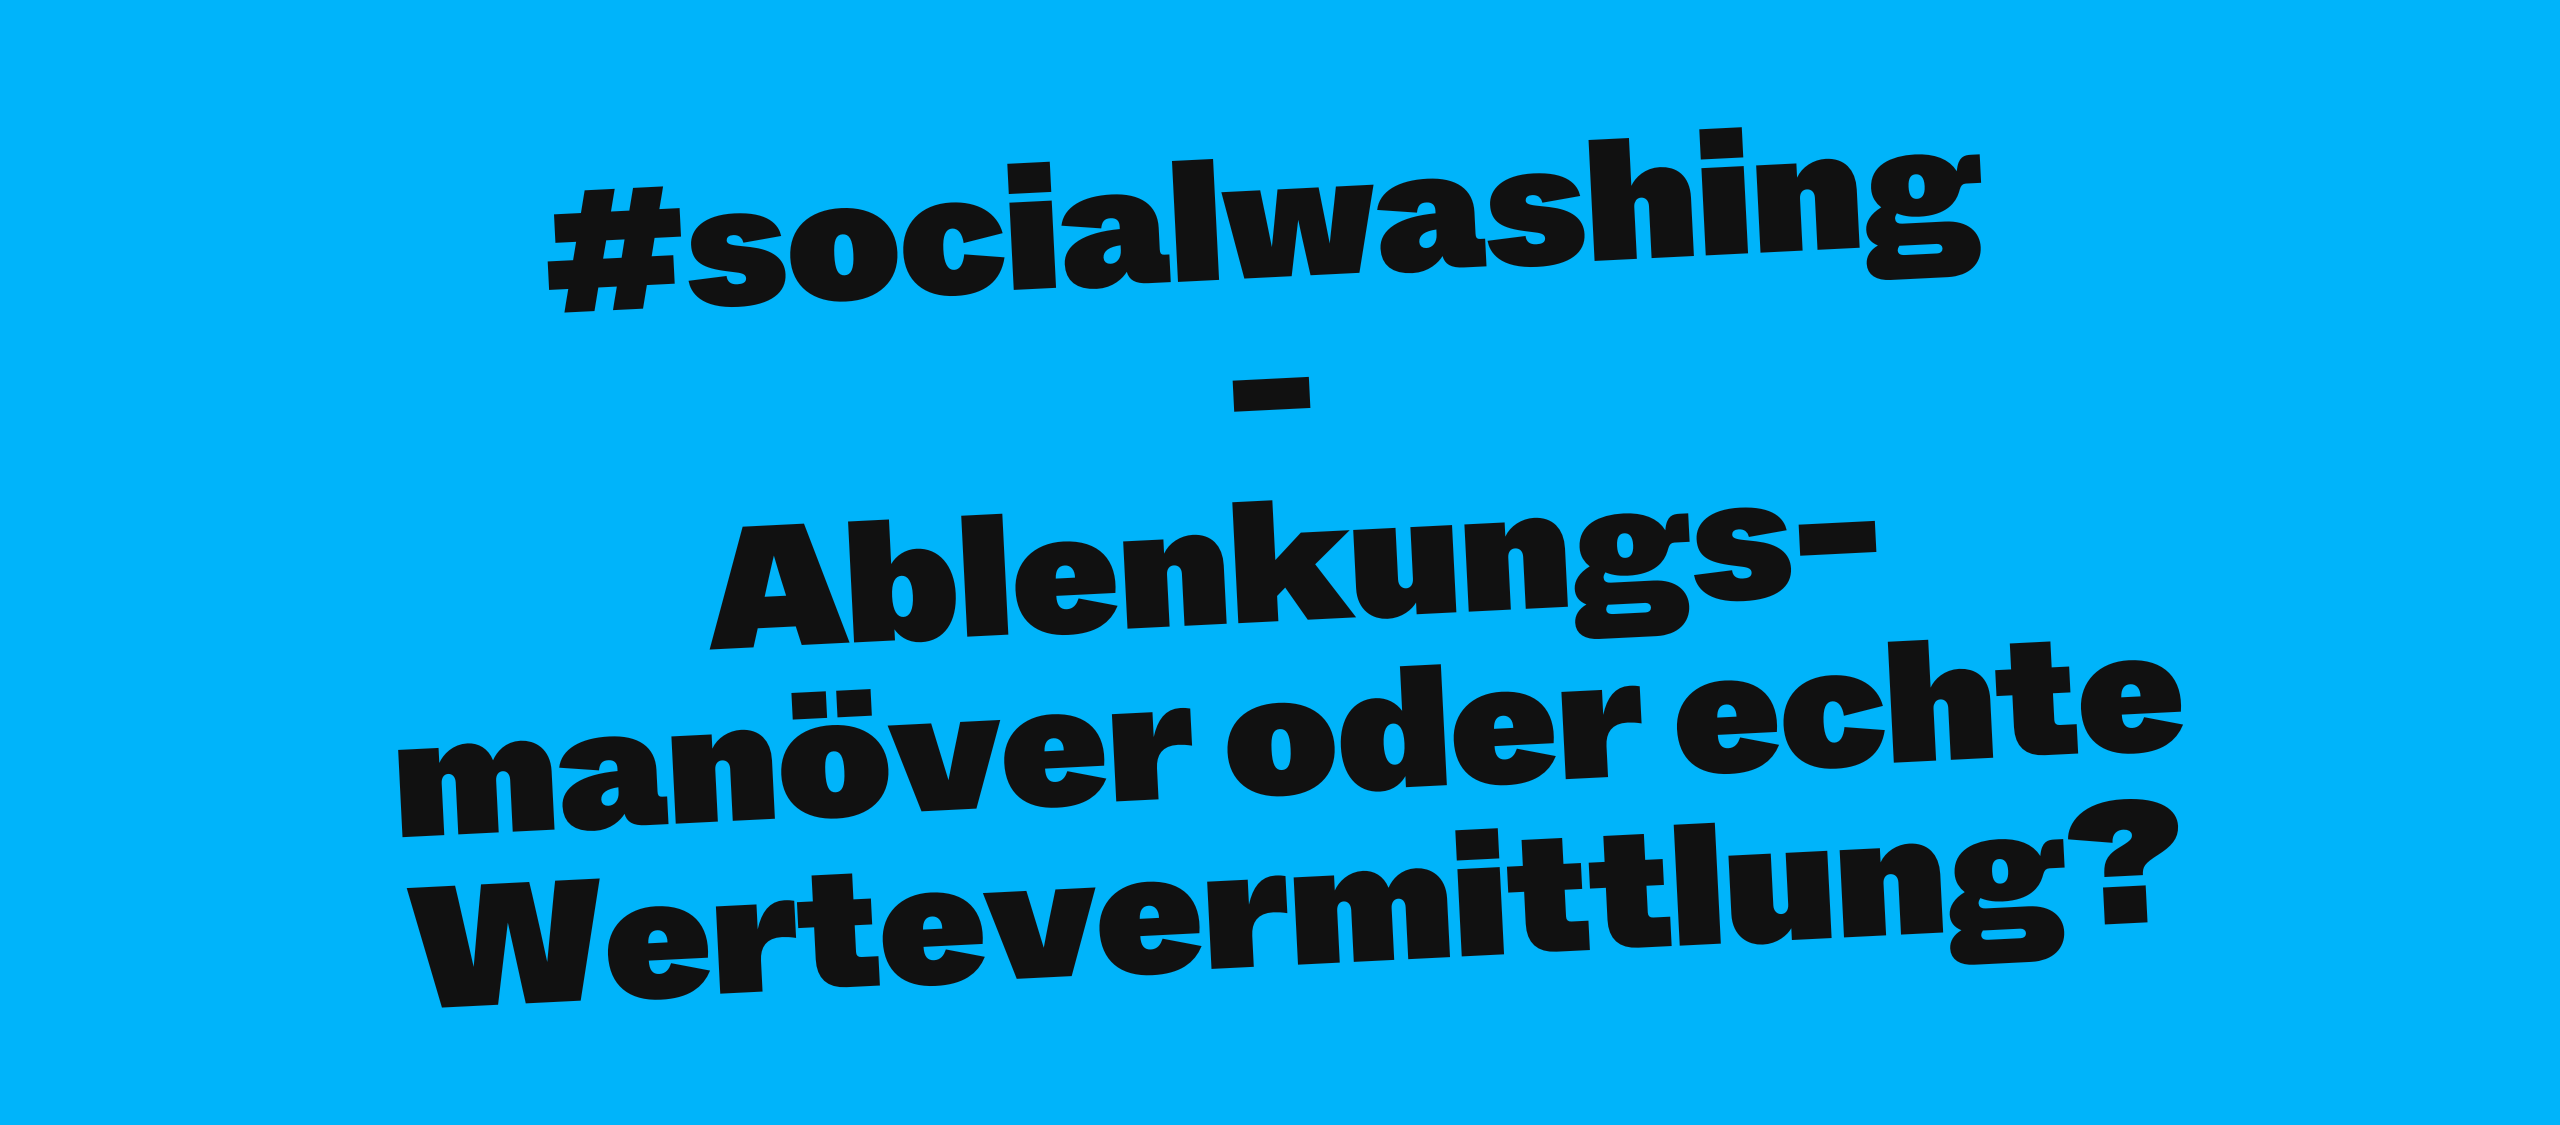 #socialwashing - Ablenkungsmanöver oder echte Wertevermittlung?